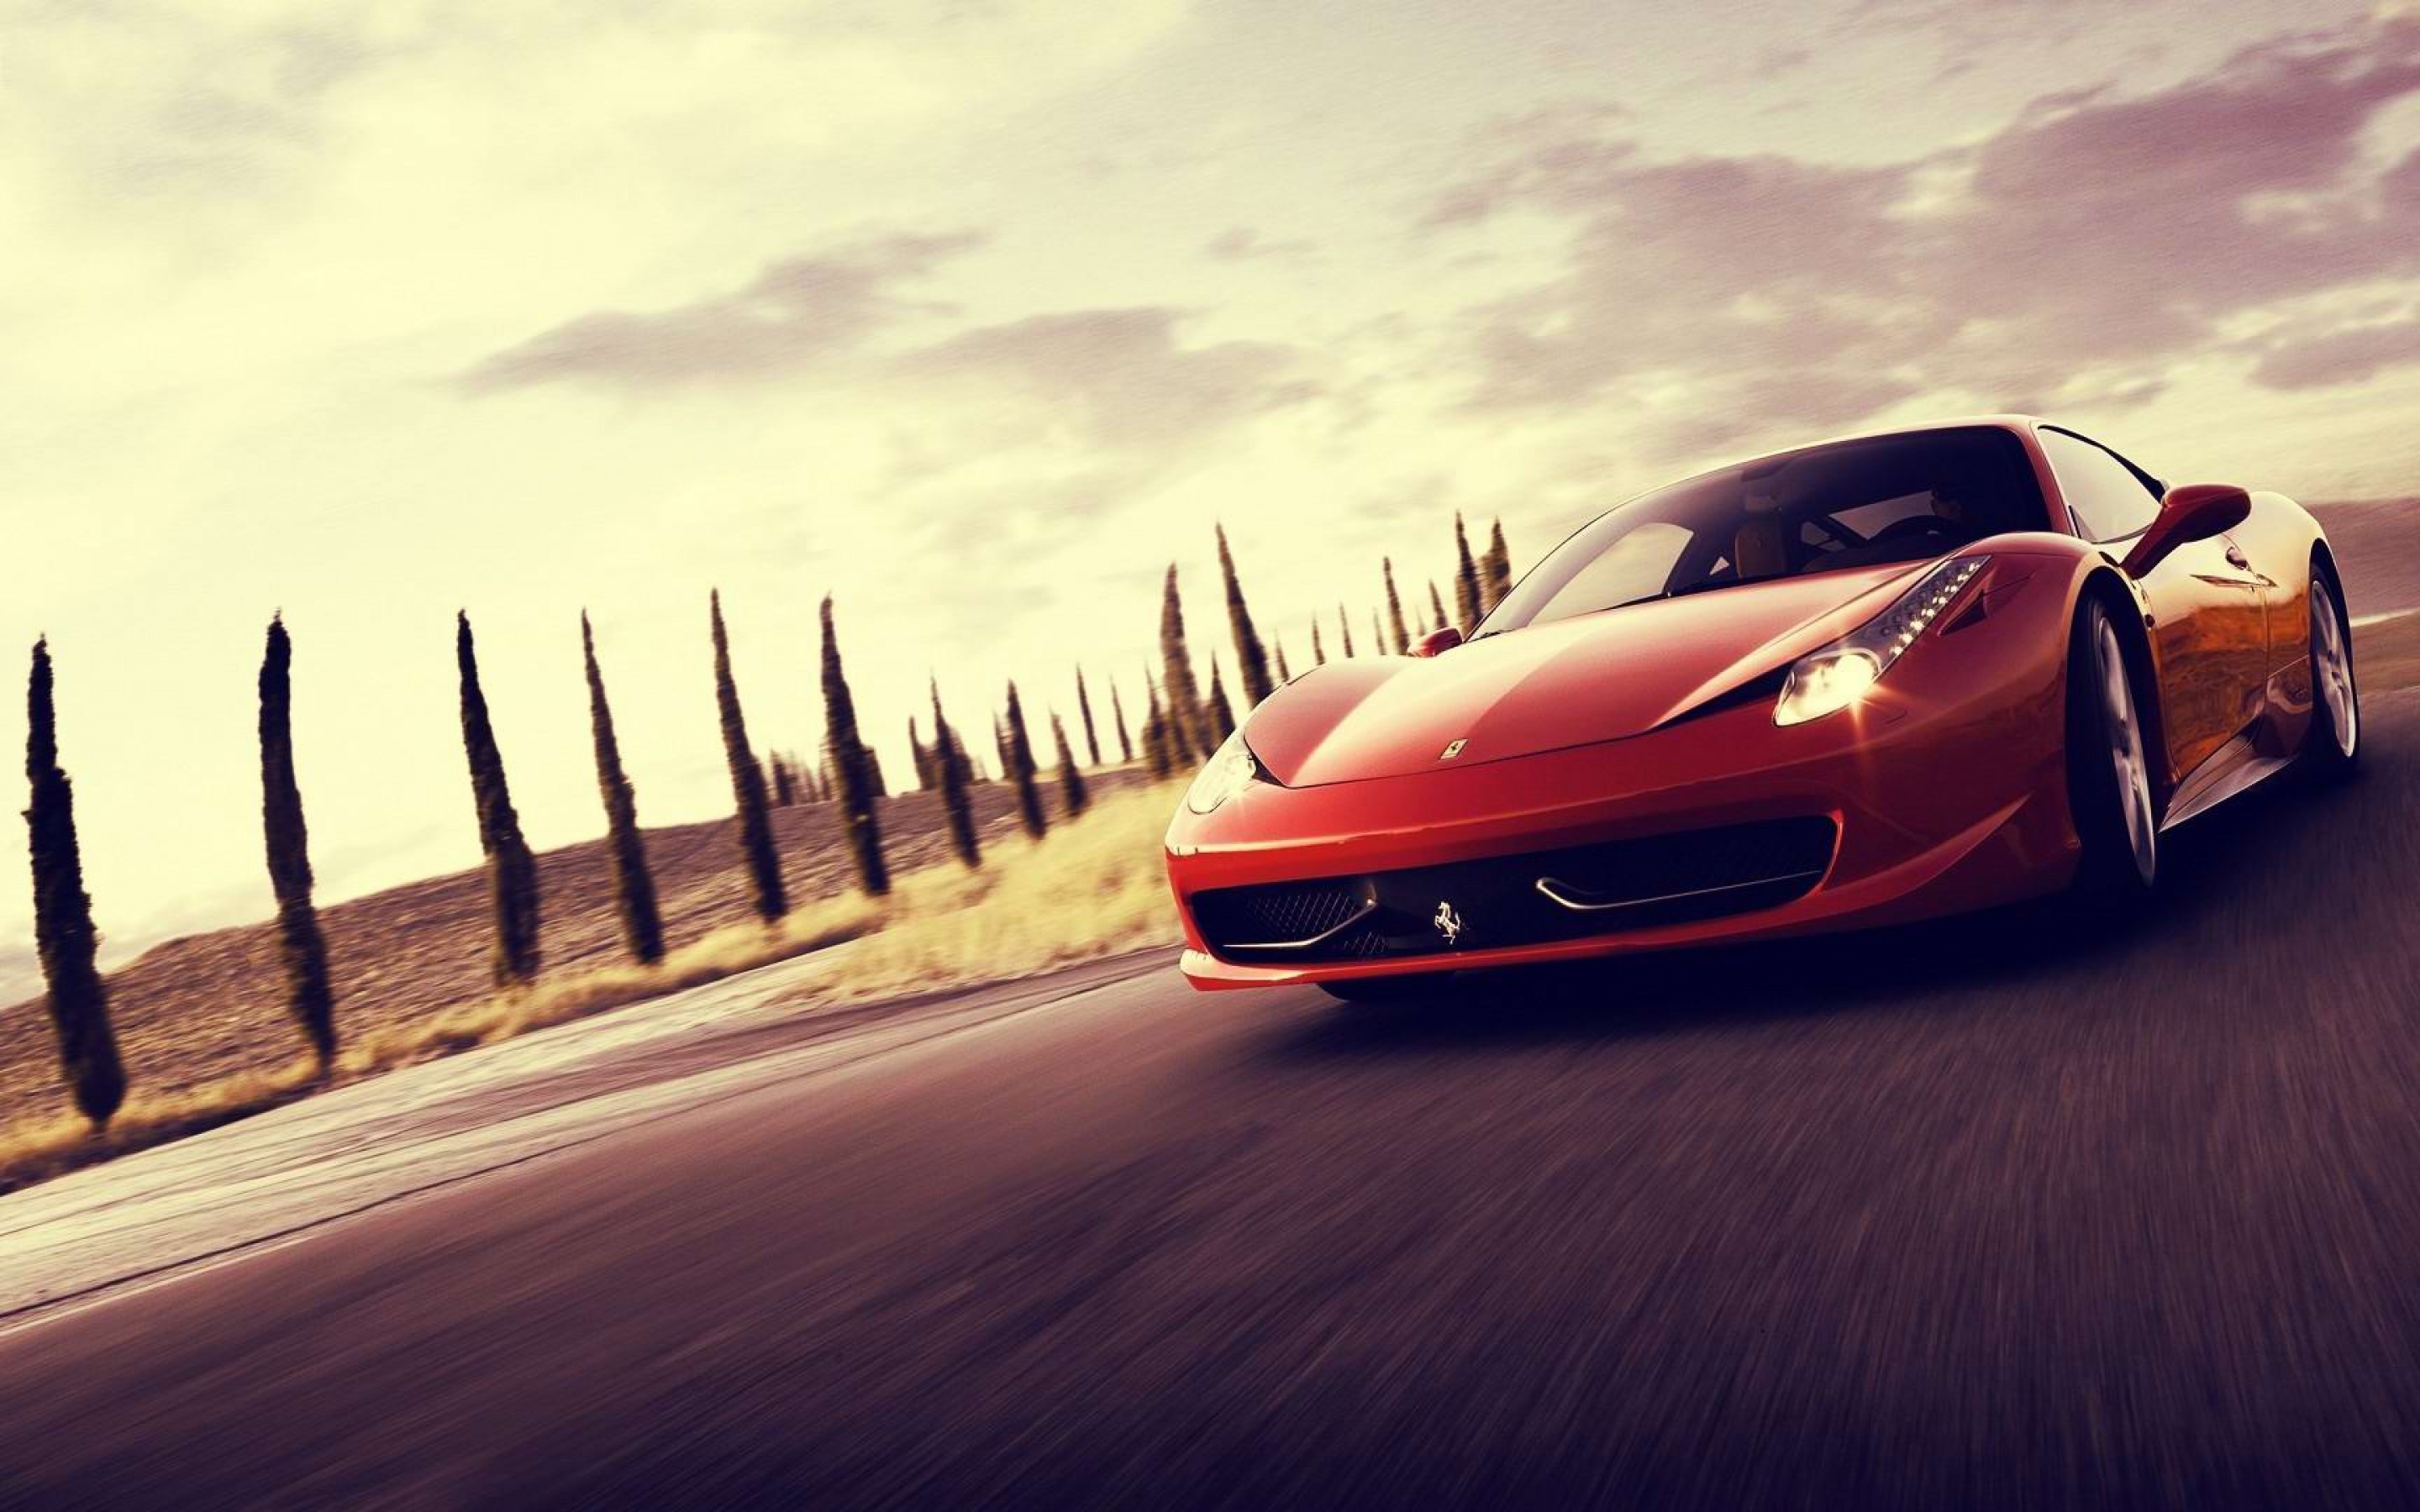 Ferrari 458 Italia HD Wallpaper Background Image 2880x1800